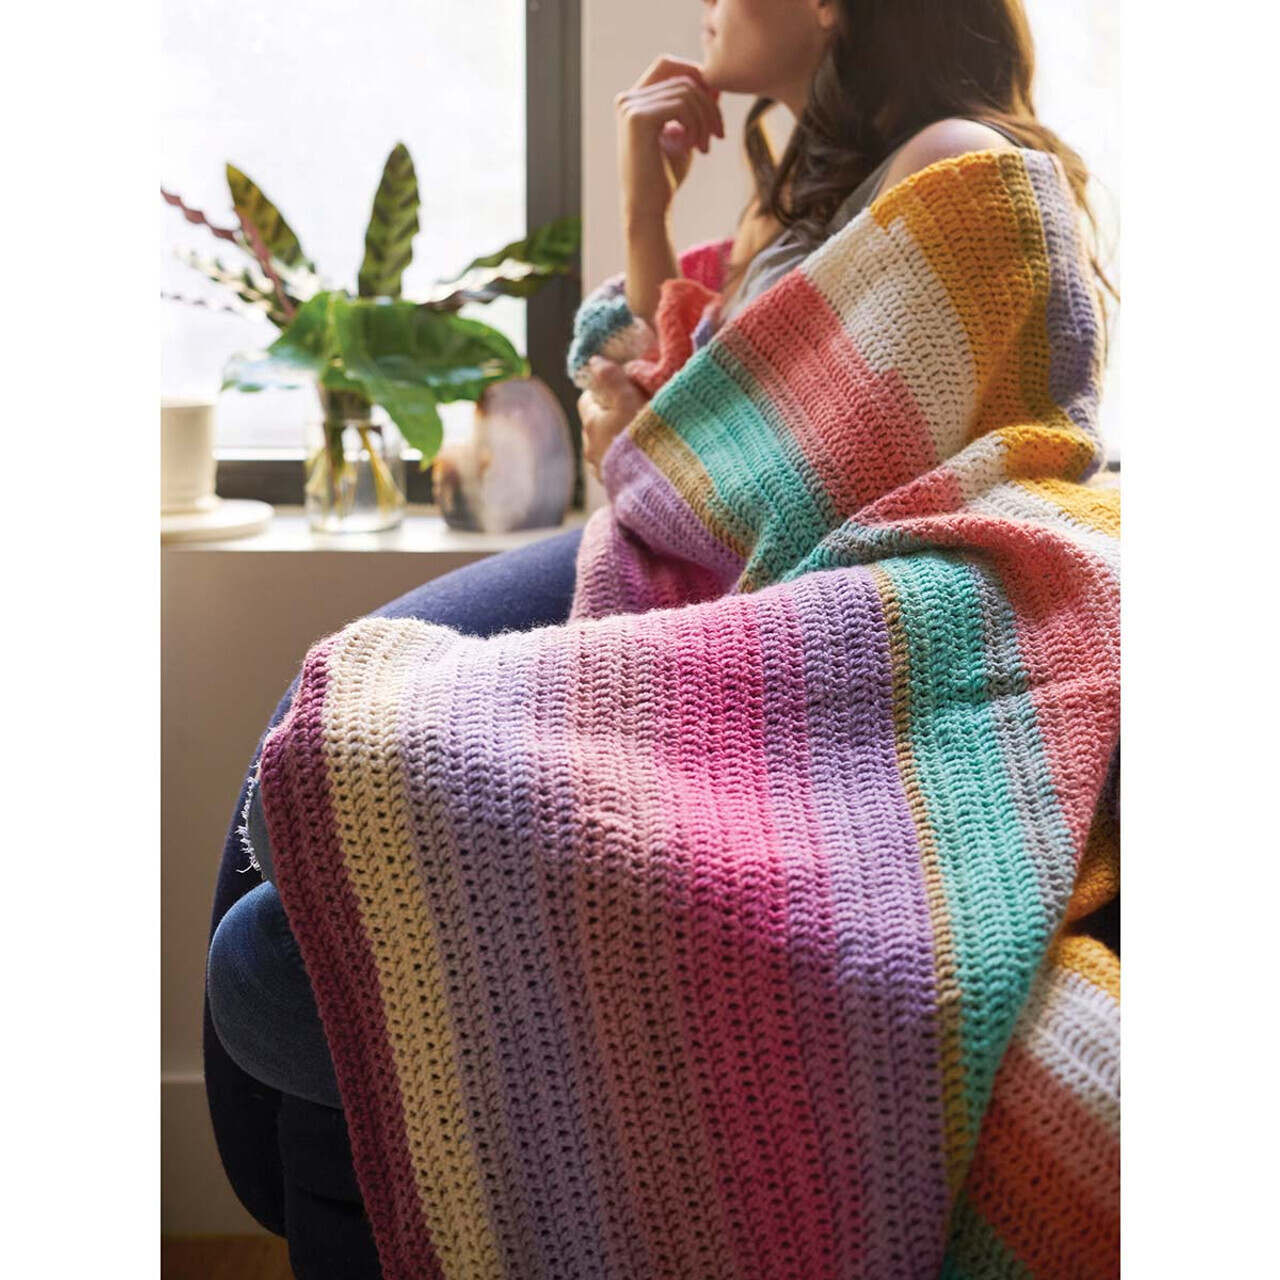 Crochet Lion Brand Cover Story Yarn, Crochet Lap Blanket